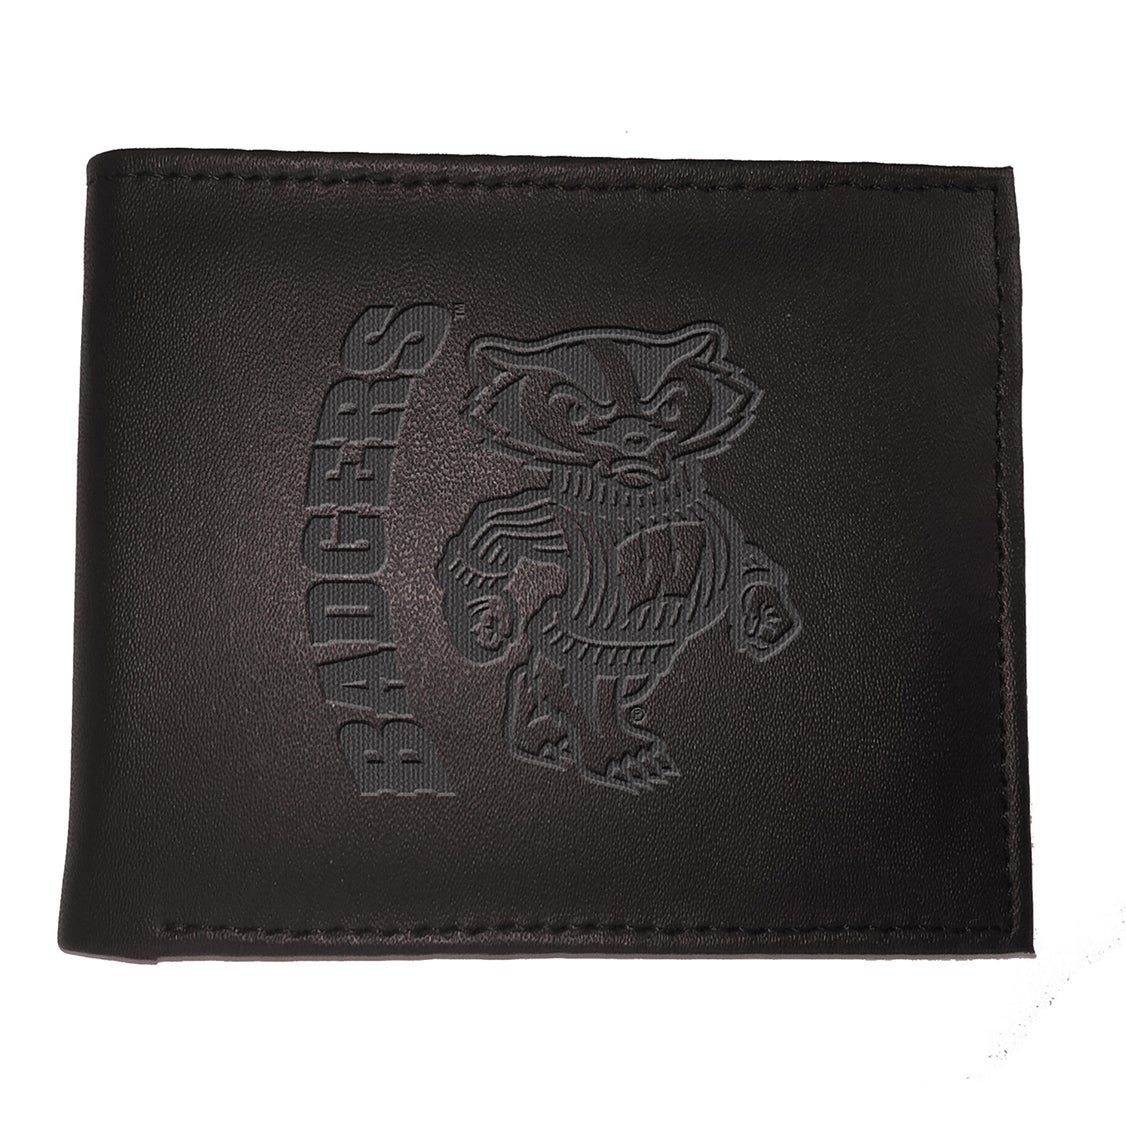 University of Wisconsin-Madison Bi-Fold Leather Wallet